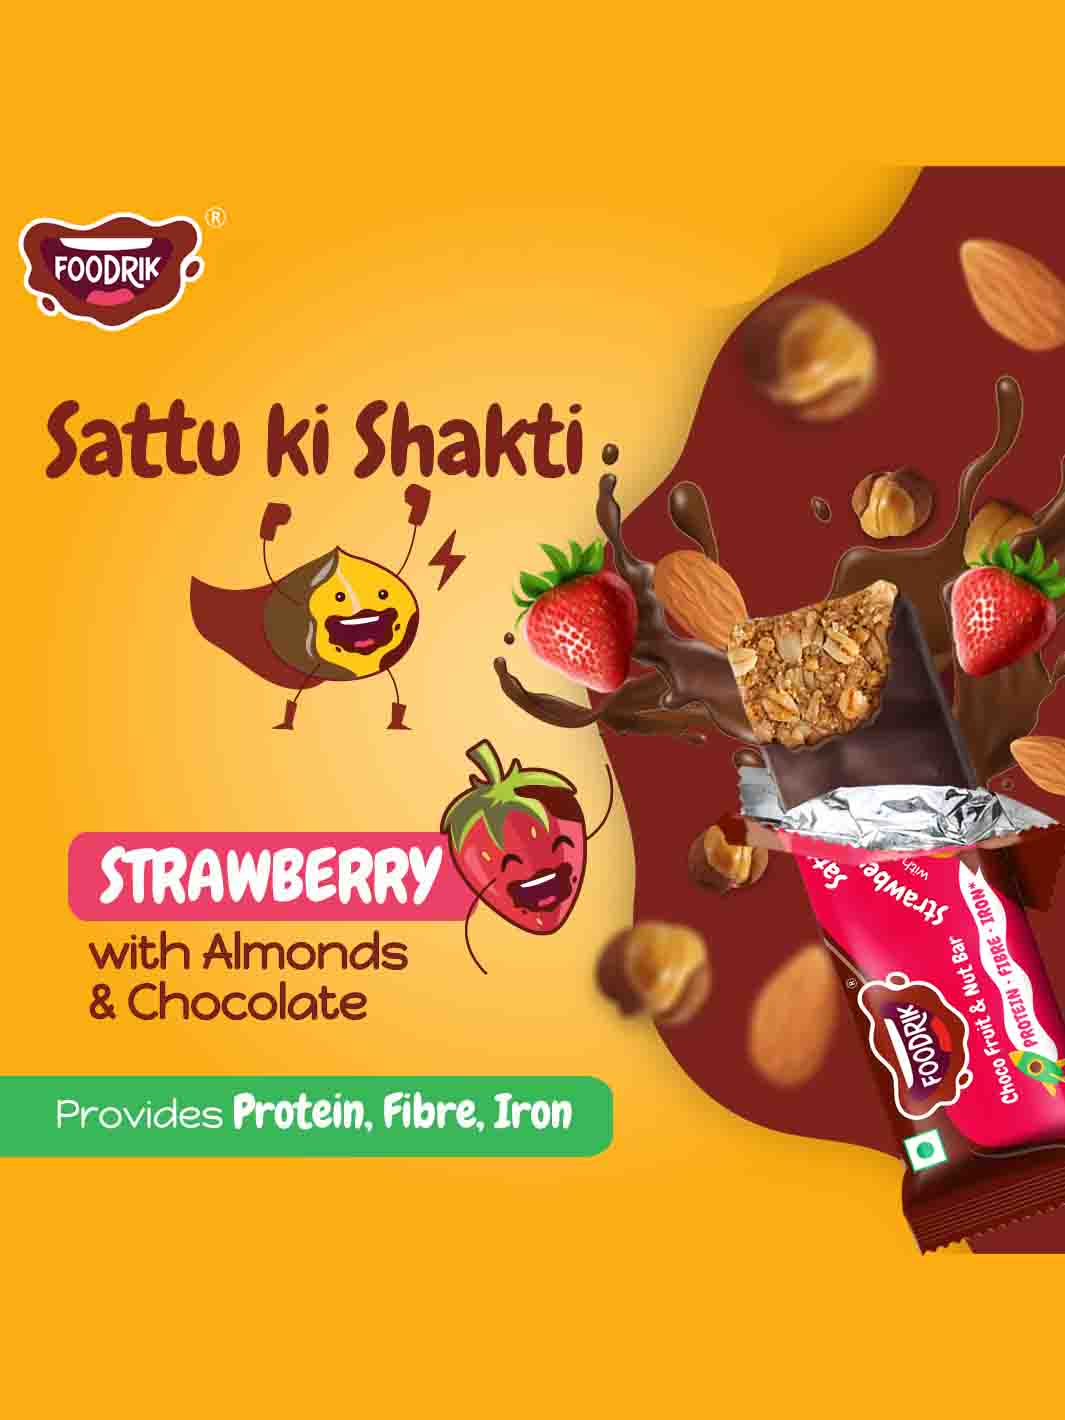 6 Bars Starter Pack - Choco Fruit & Nut Strawberry